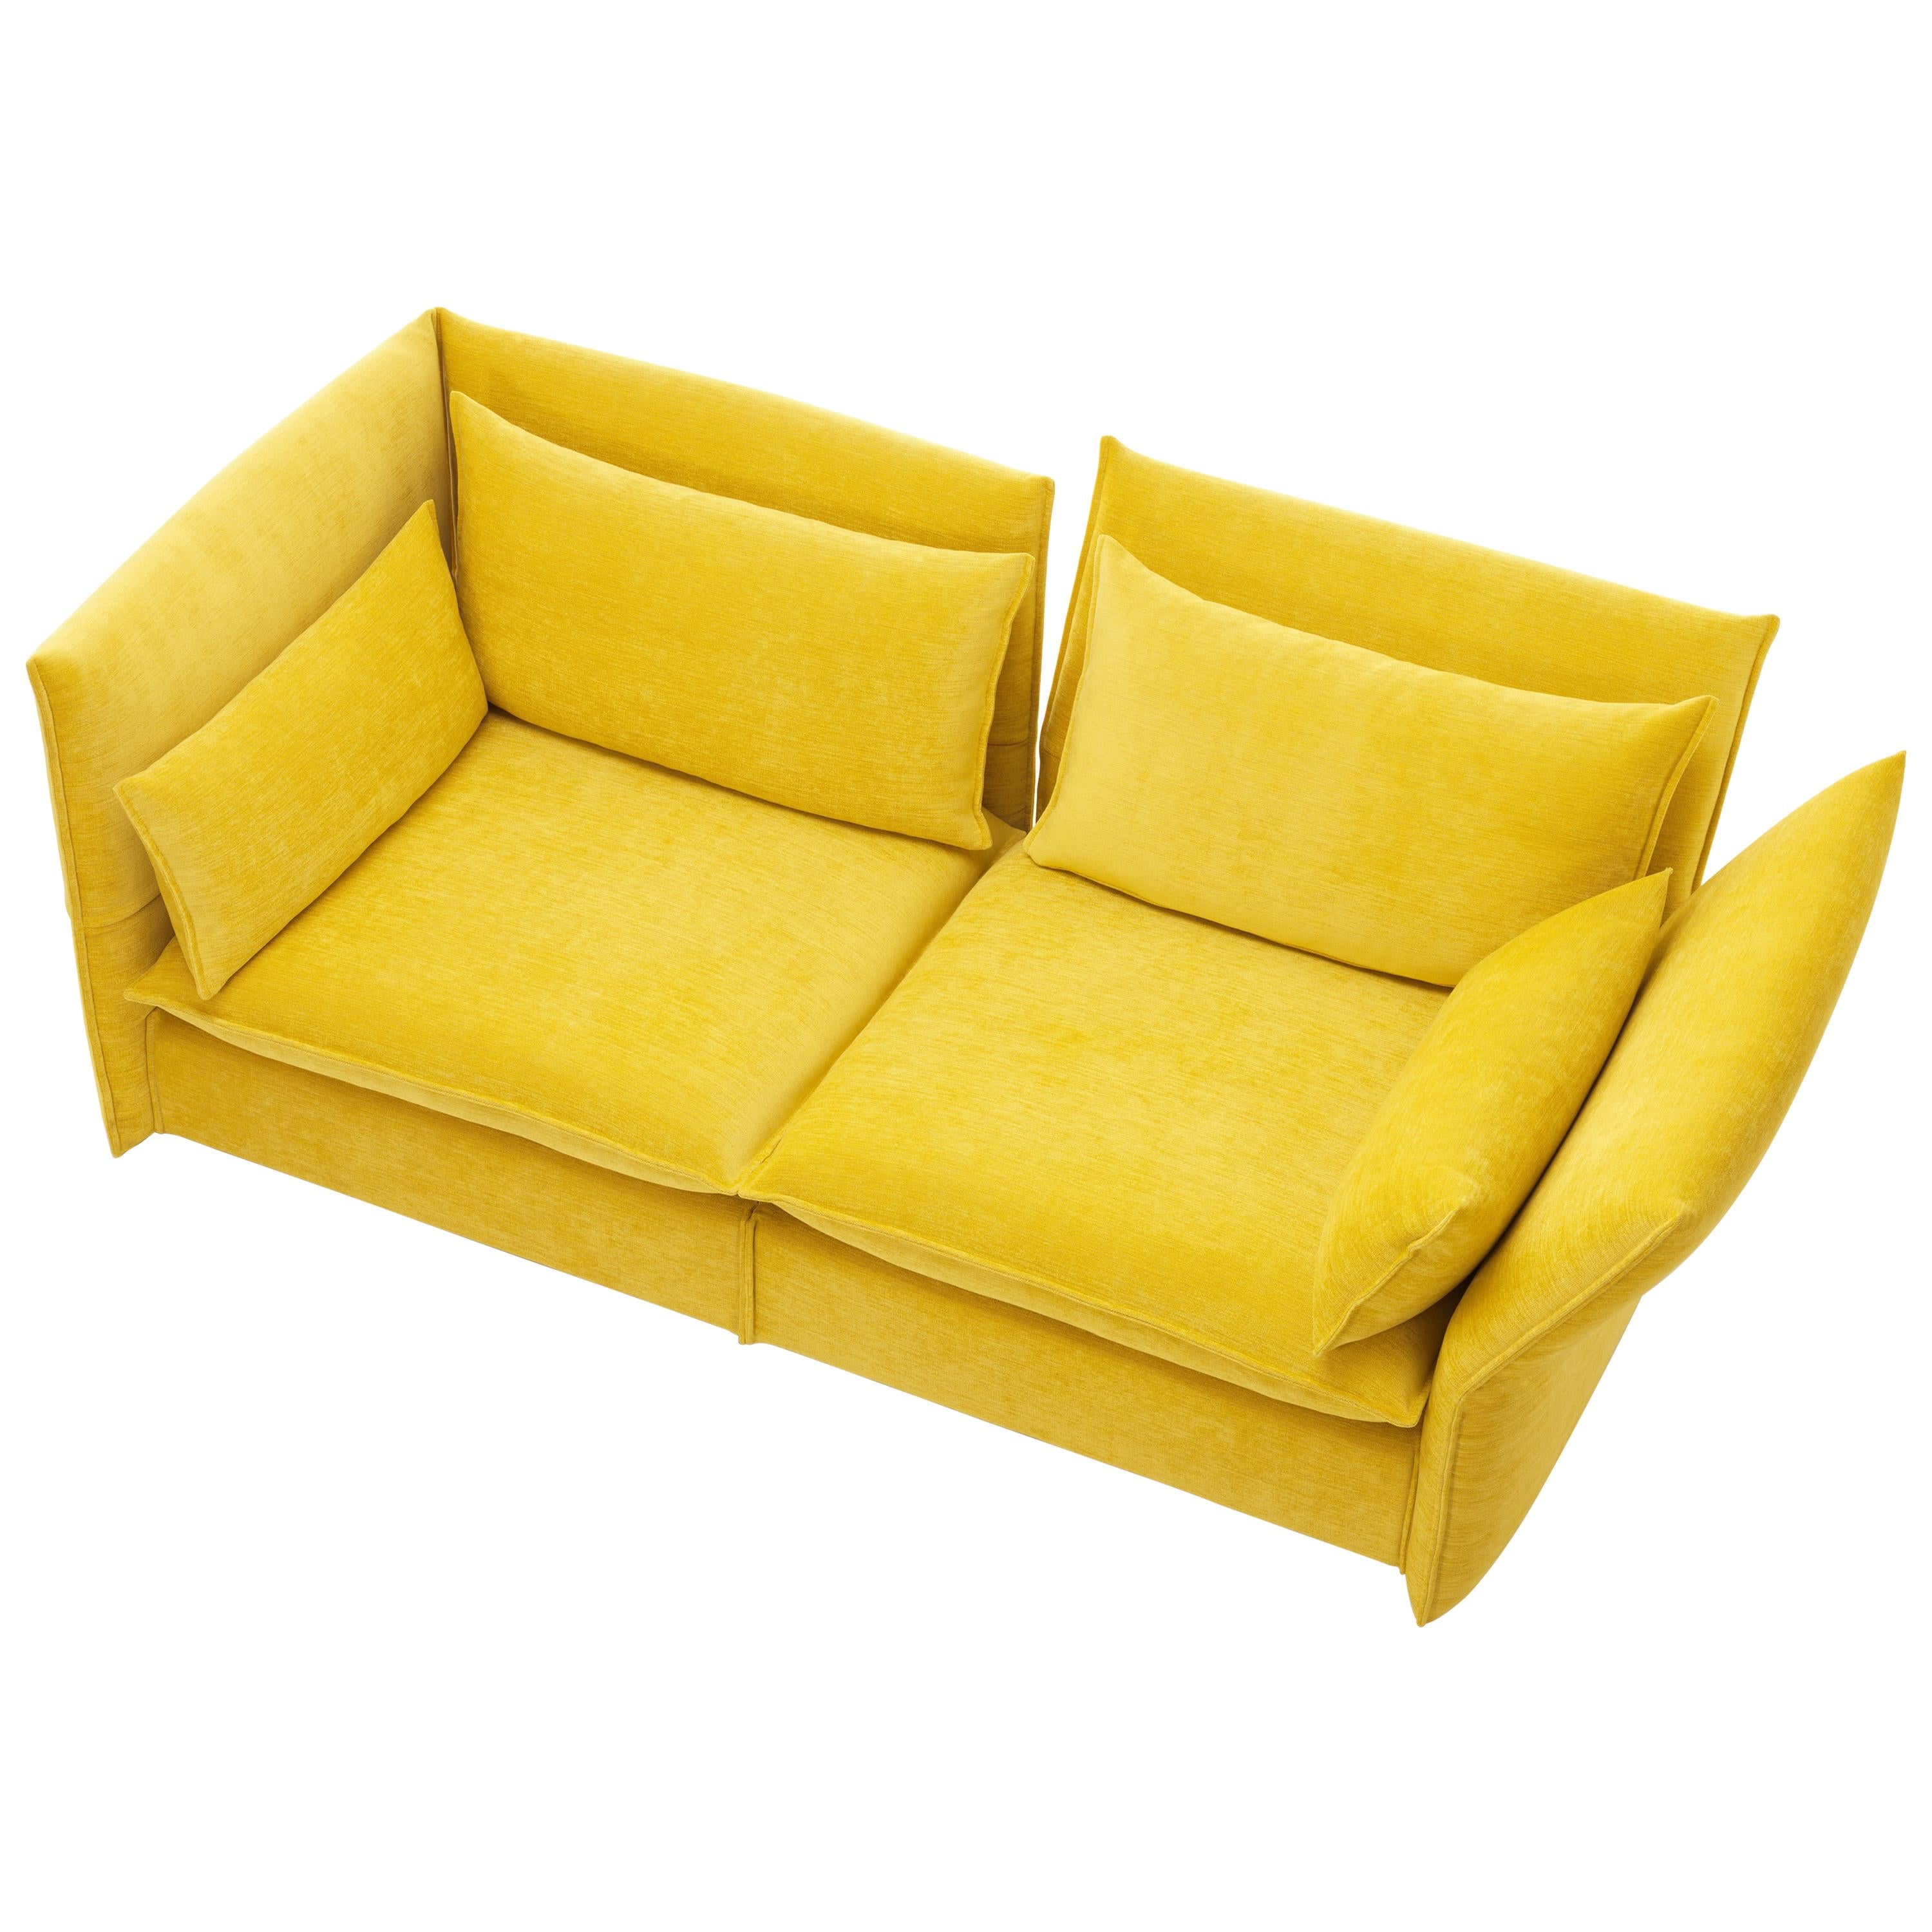 Vitra Mariposa 2 1/2-Seat Sofa in Lemon Iroko2 by Edward Barber & Jay Osgerby For Sale